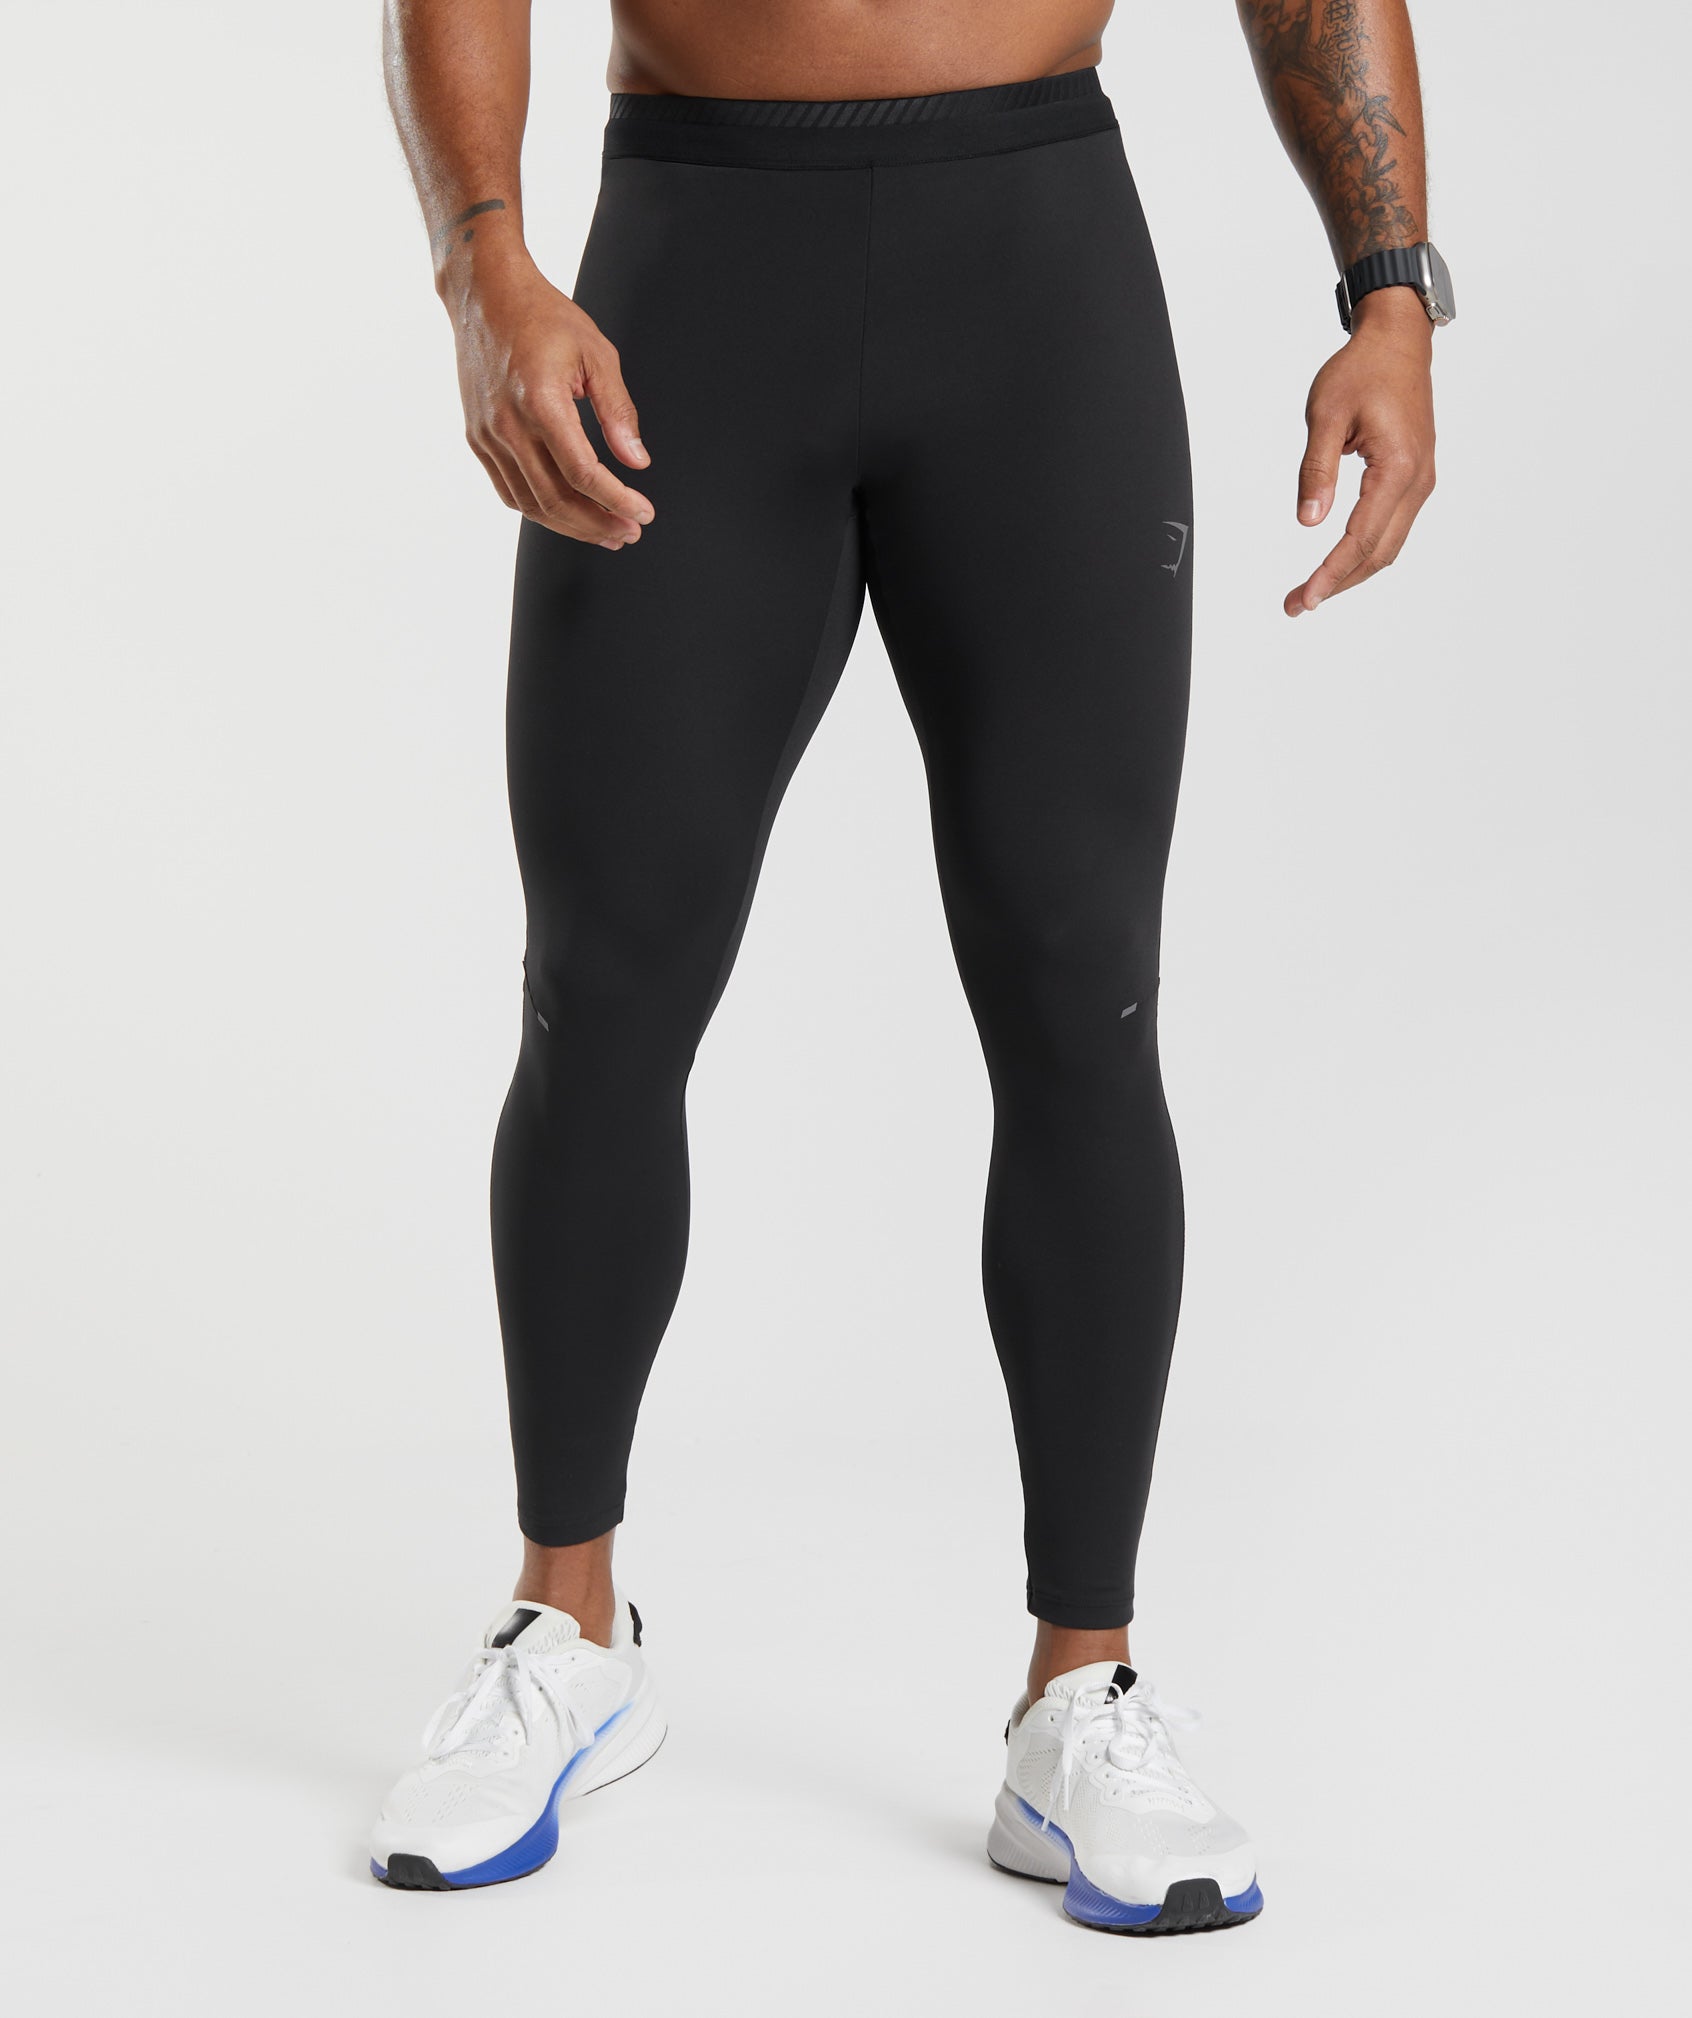 Mens Gym Tight Running Compression Leggings Sport Training Tights Capri  Pants for Men Workout Basketball 3XL Jogging Leggings